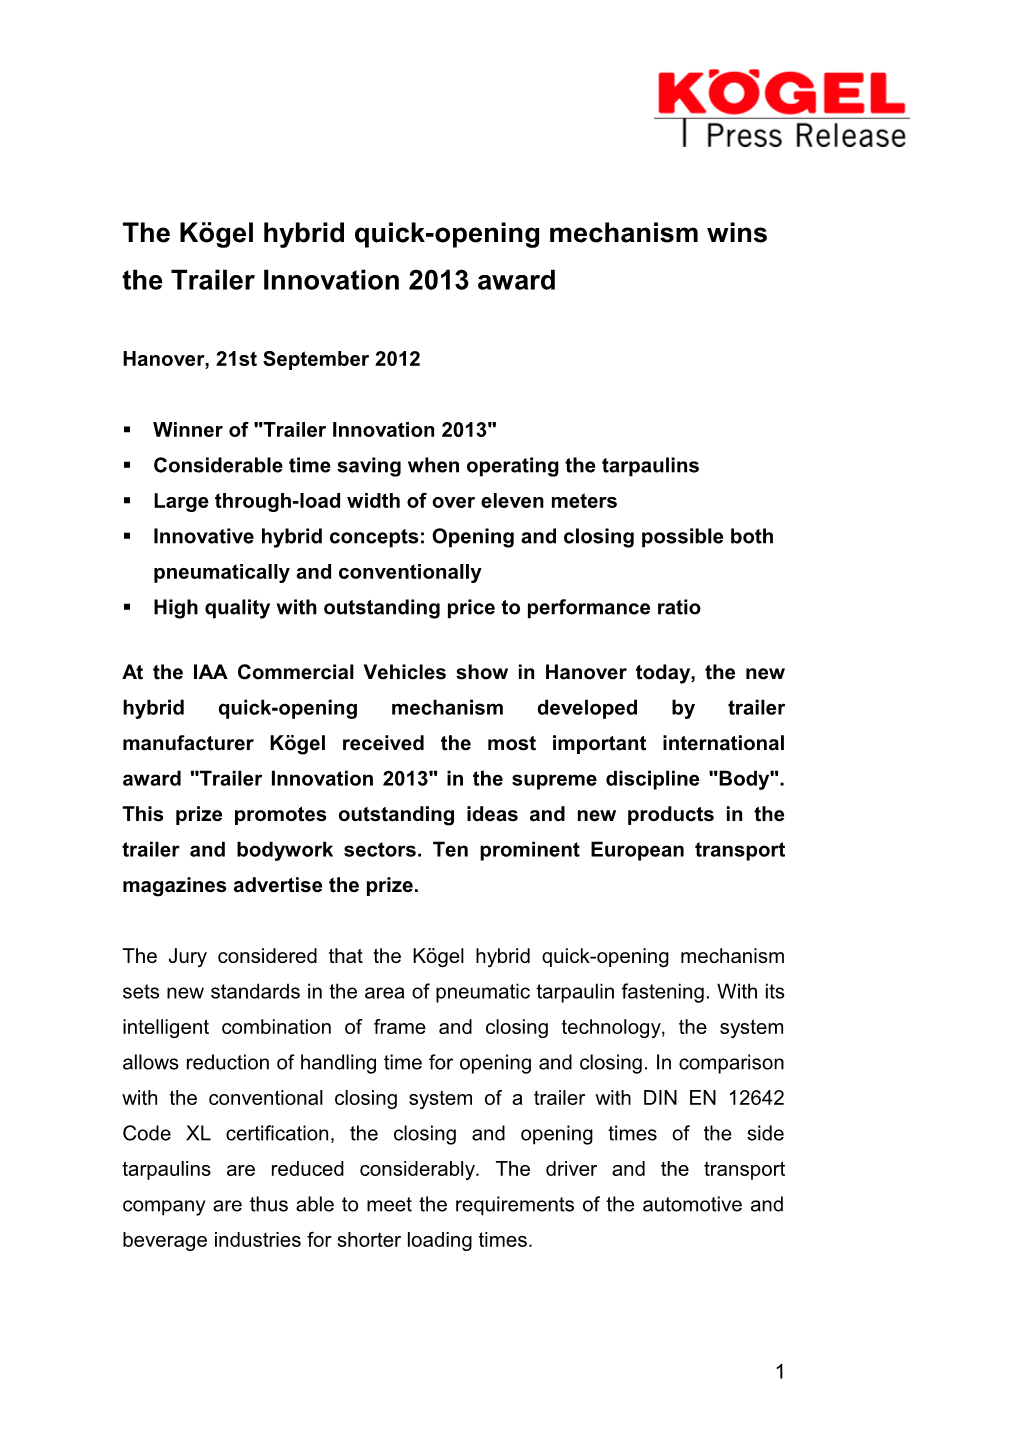 The Kögel Hybrid Quick-Opening Mechanism Wins the Trailer Innovation 2013 Award